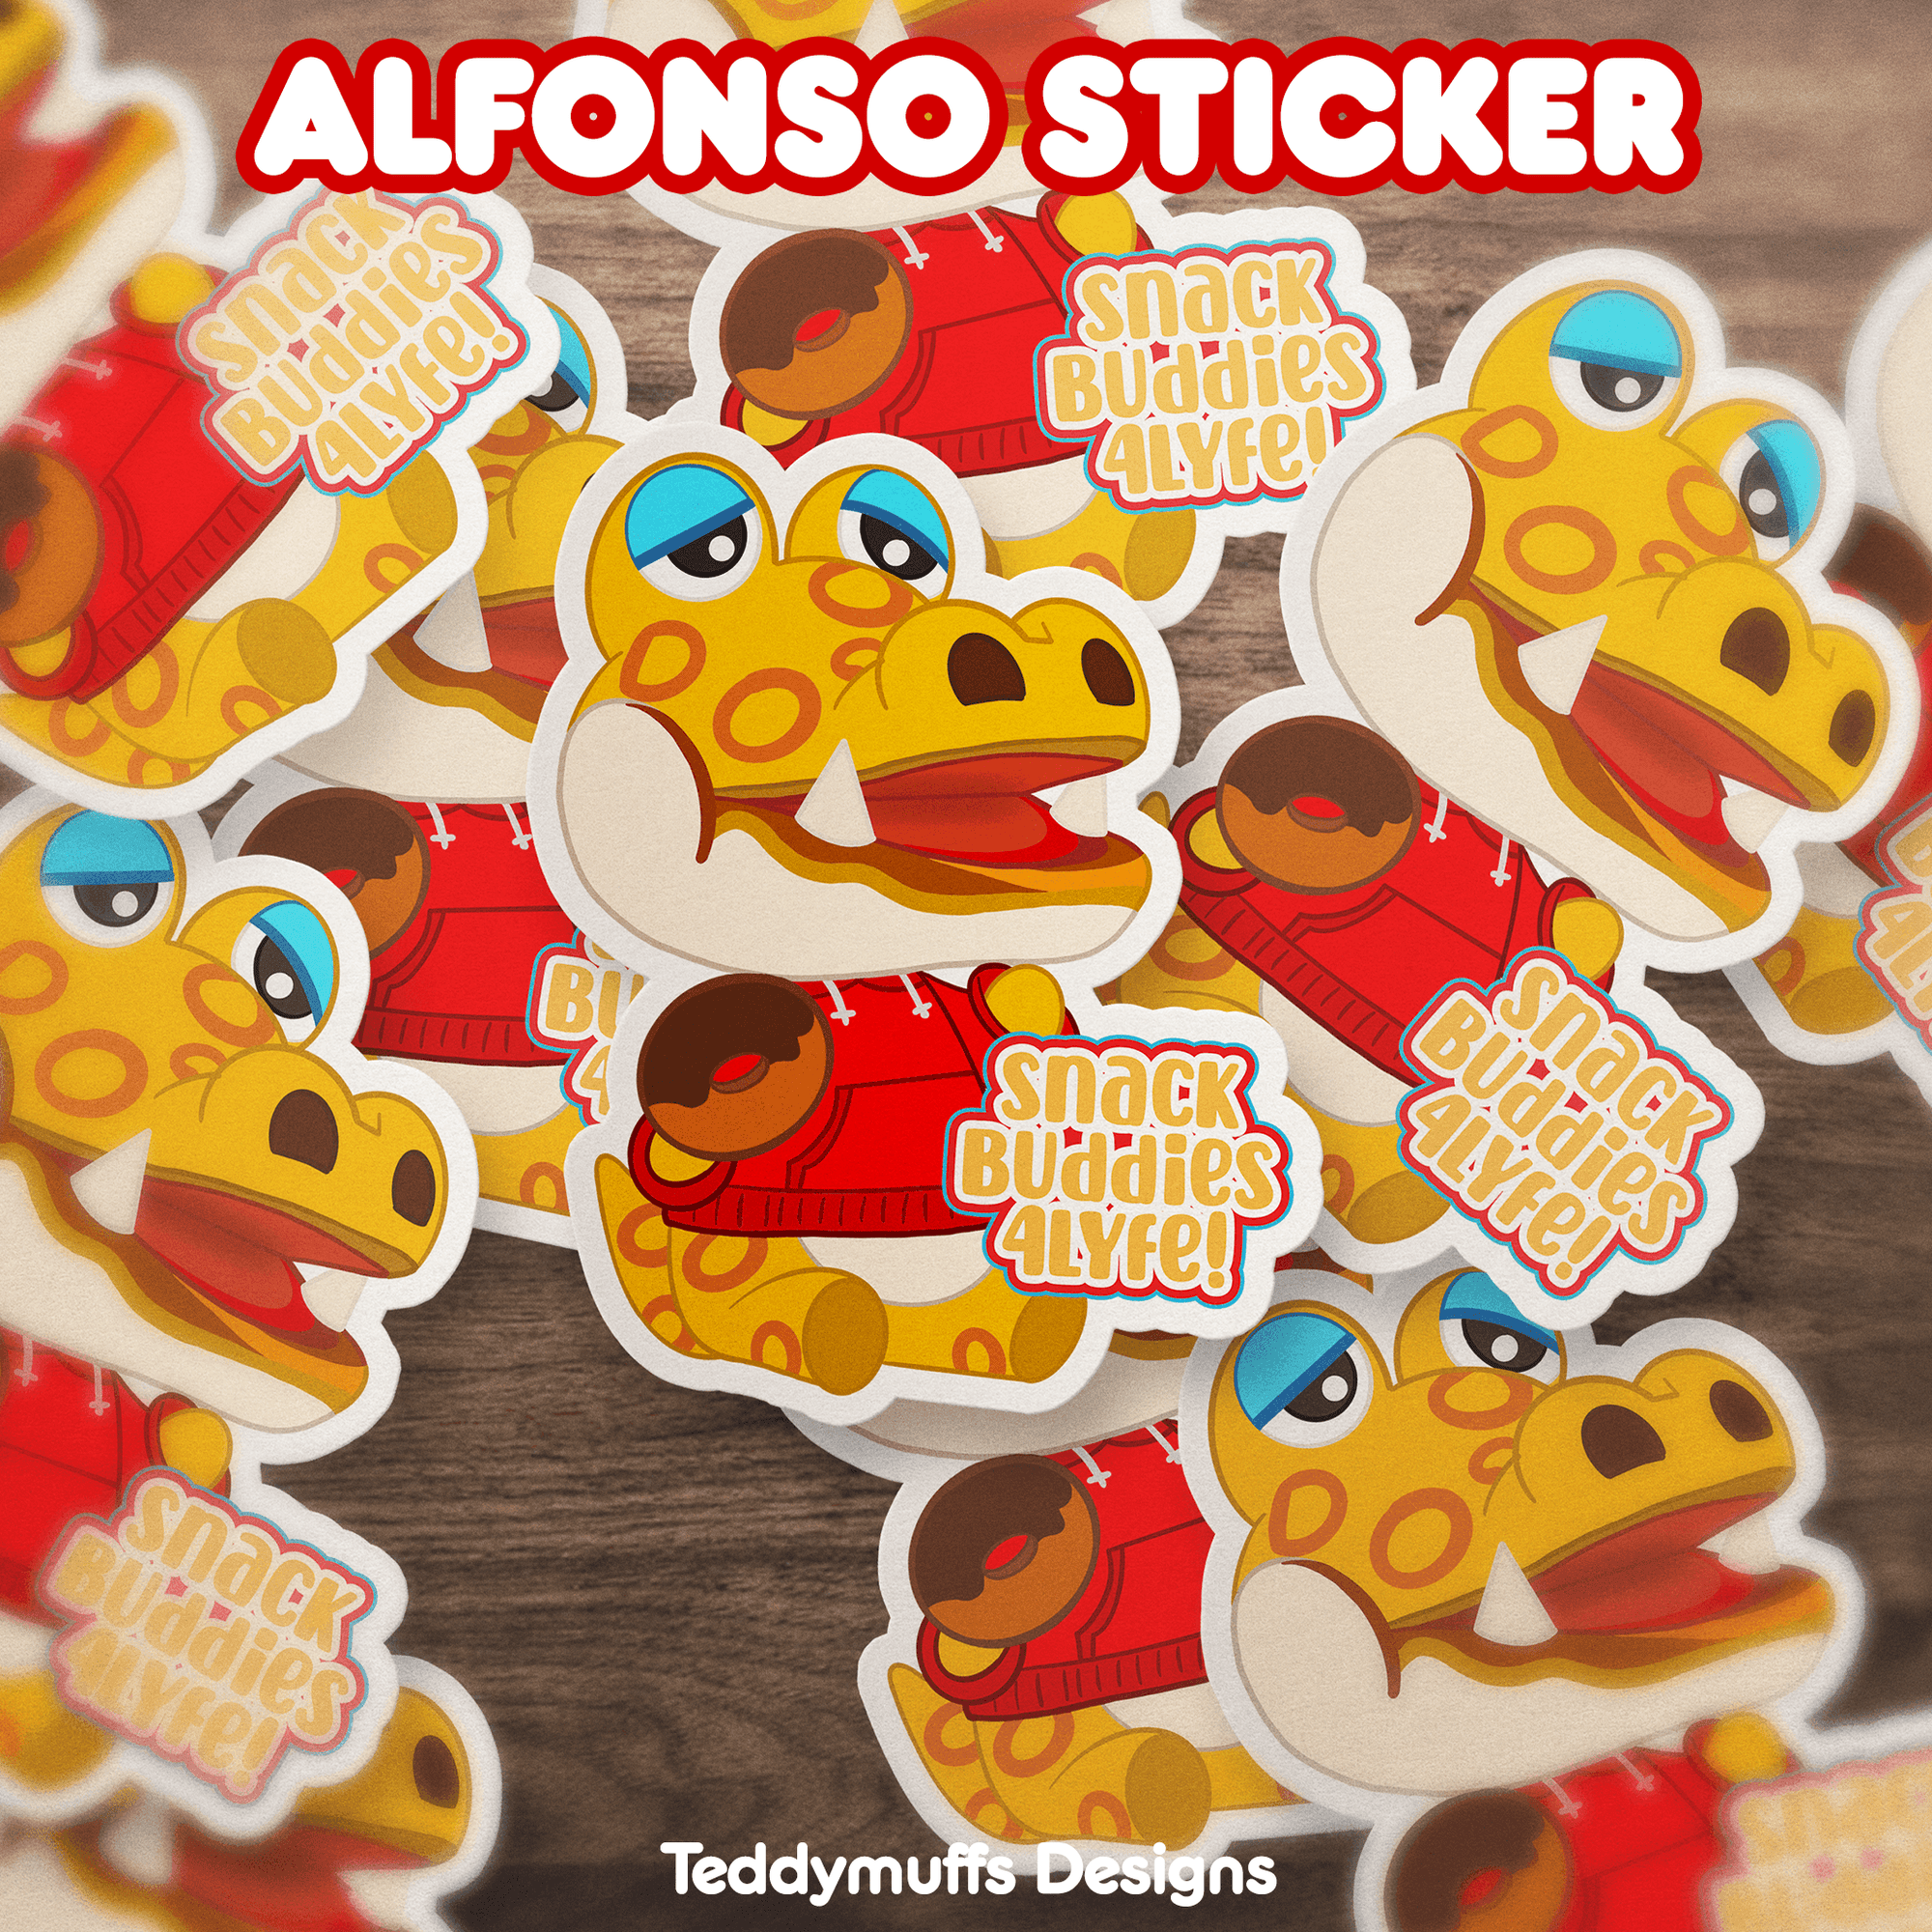 Alfonso "Snack Buddy" Sticker - Teddymuffs Designs